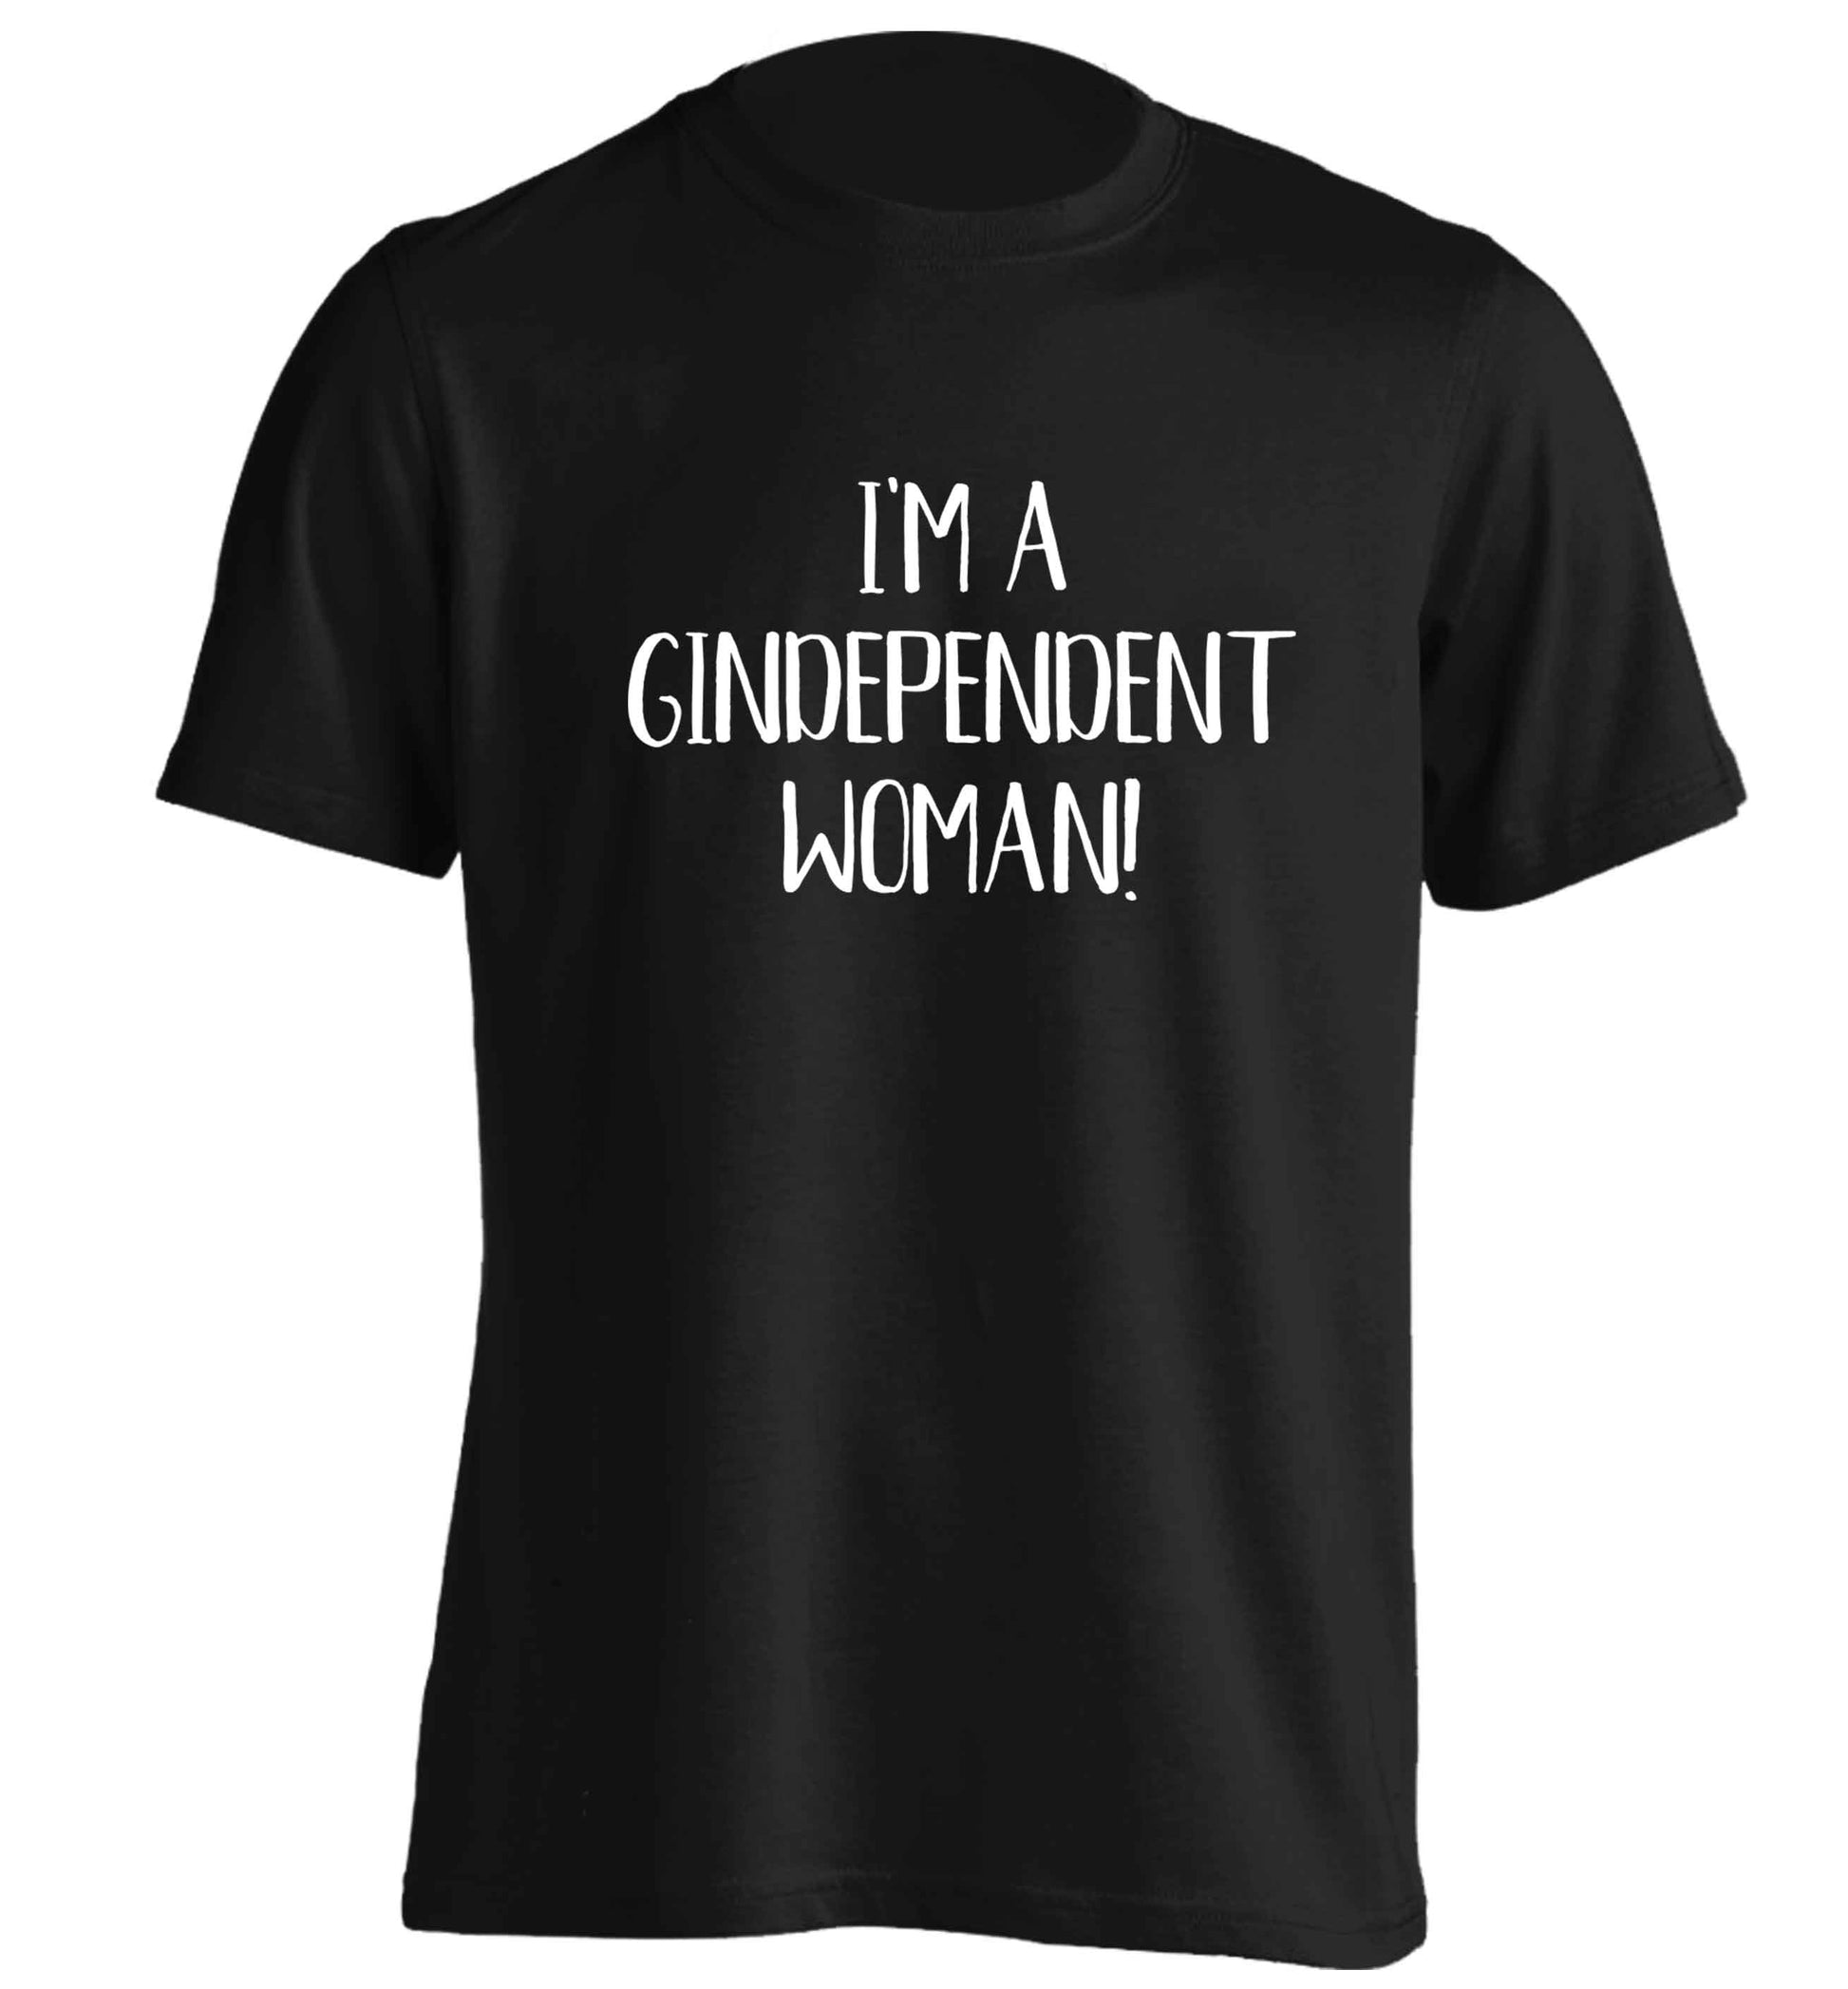 I'm a gindependent woman adults unisex black Tshirt 2XL